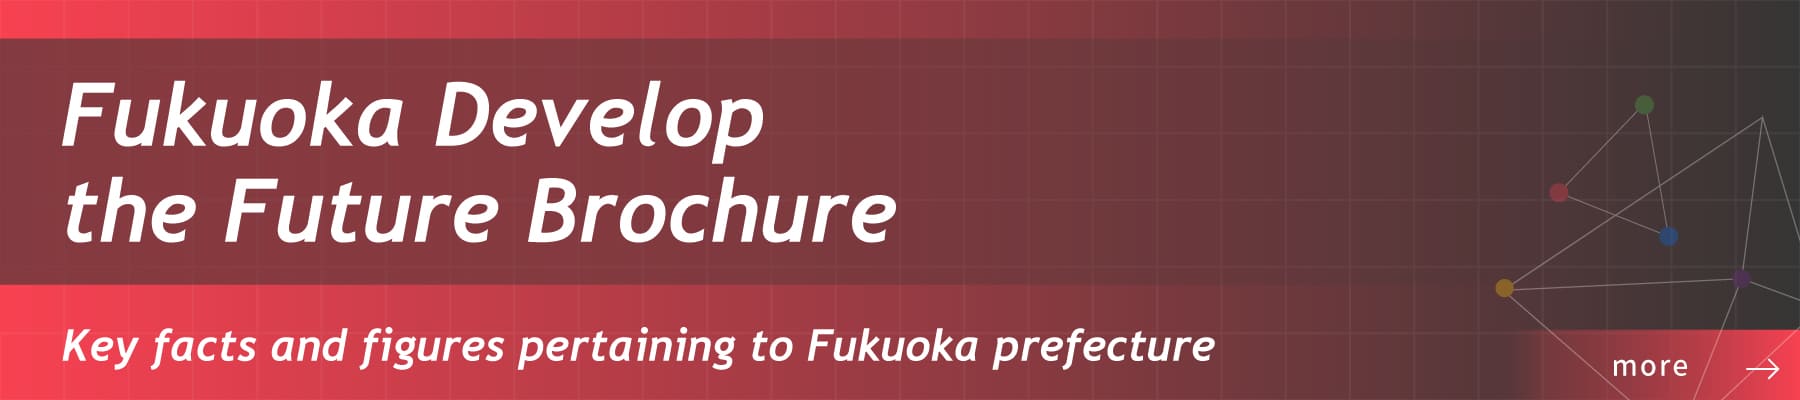 Fukuoka Develop the Future Brochure/Key facts and figures pertaining to Fukuoka prefecture